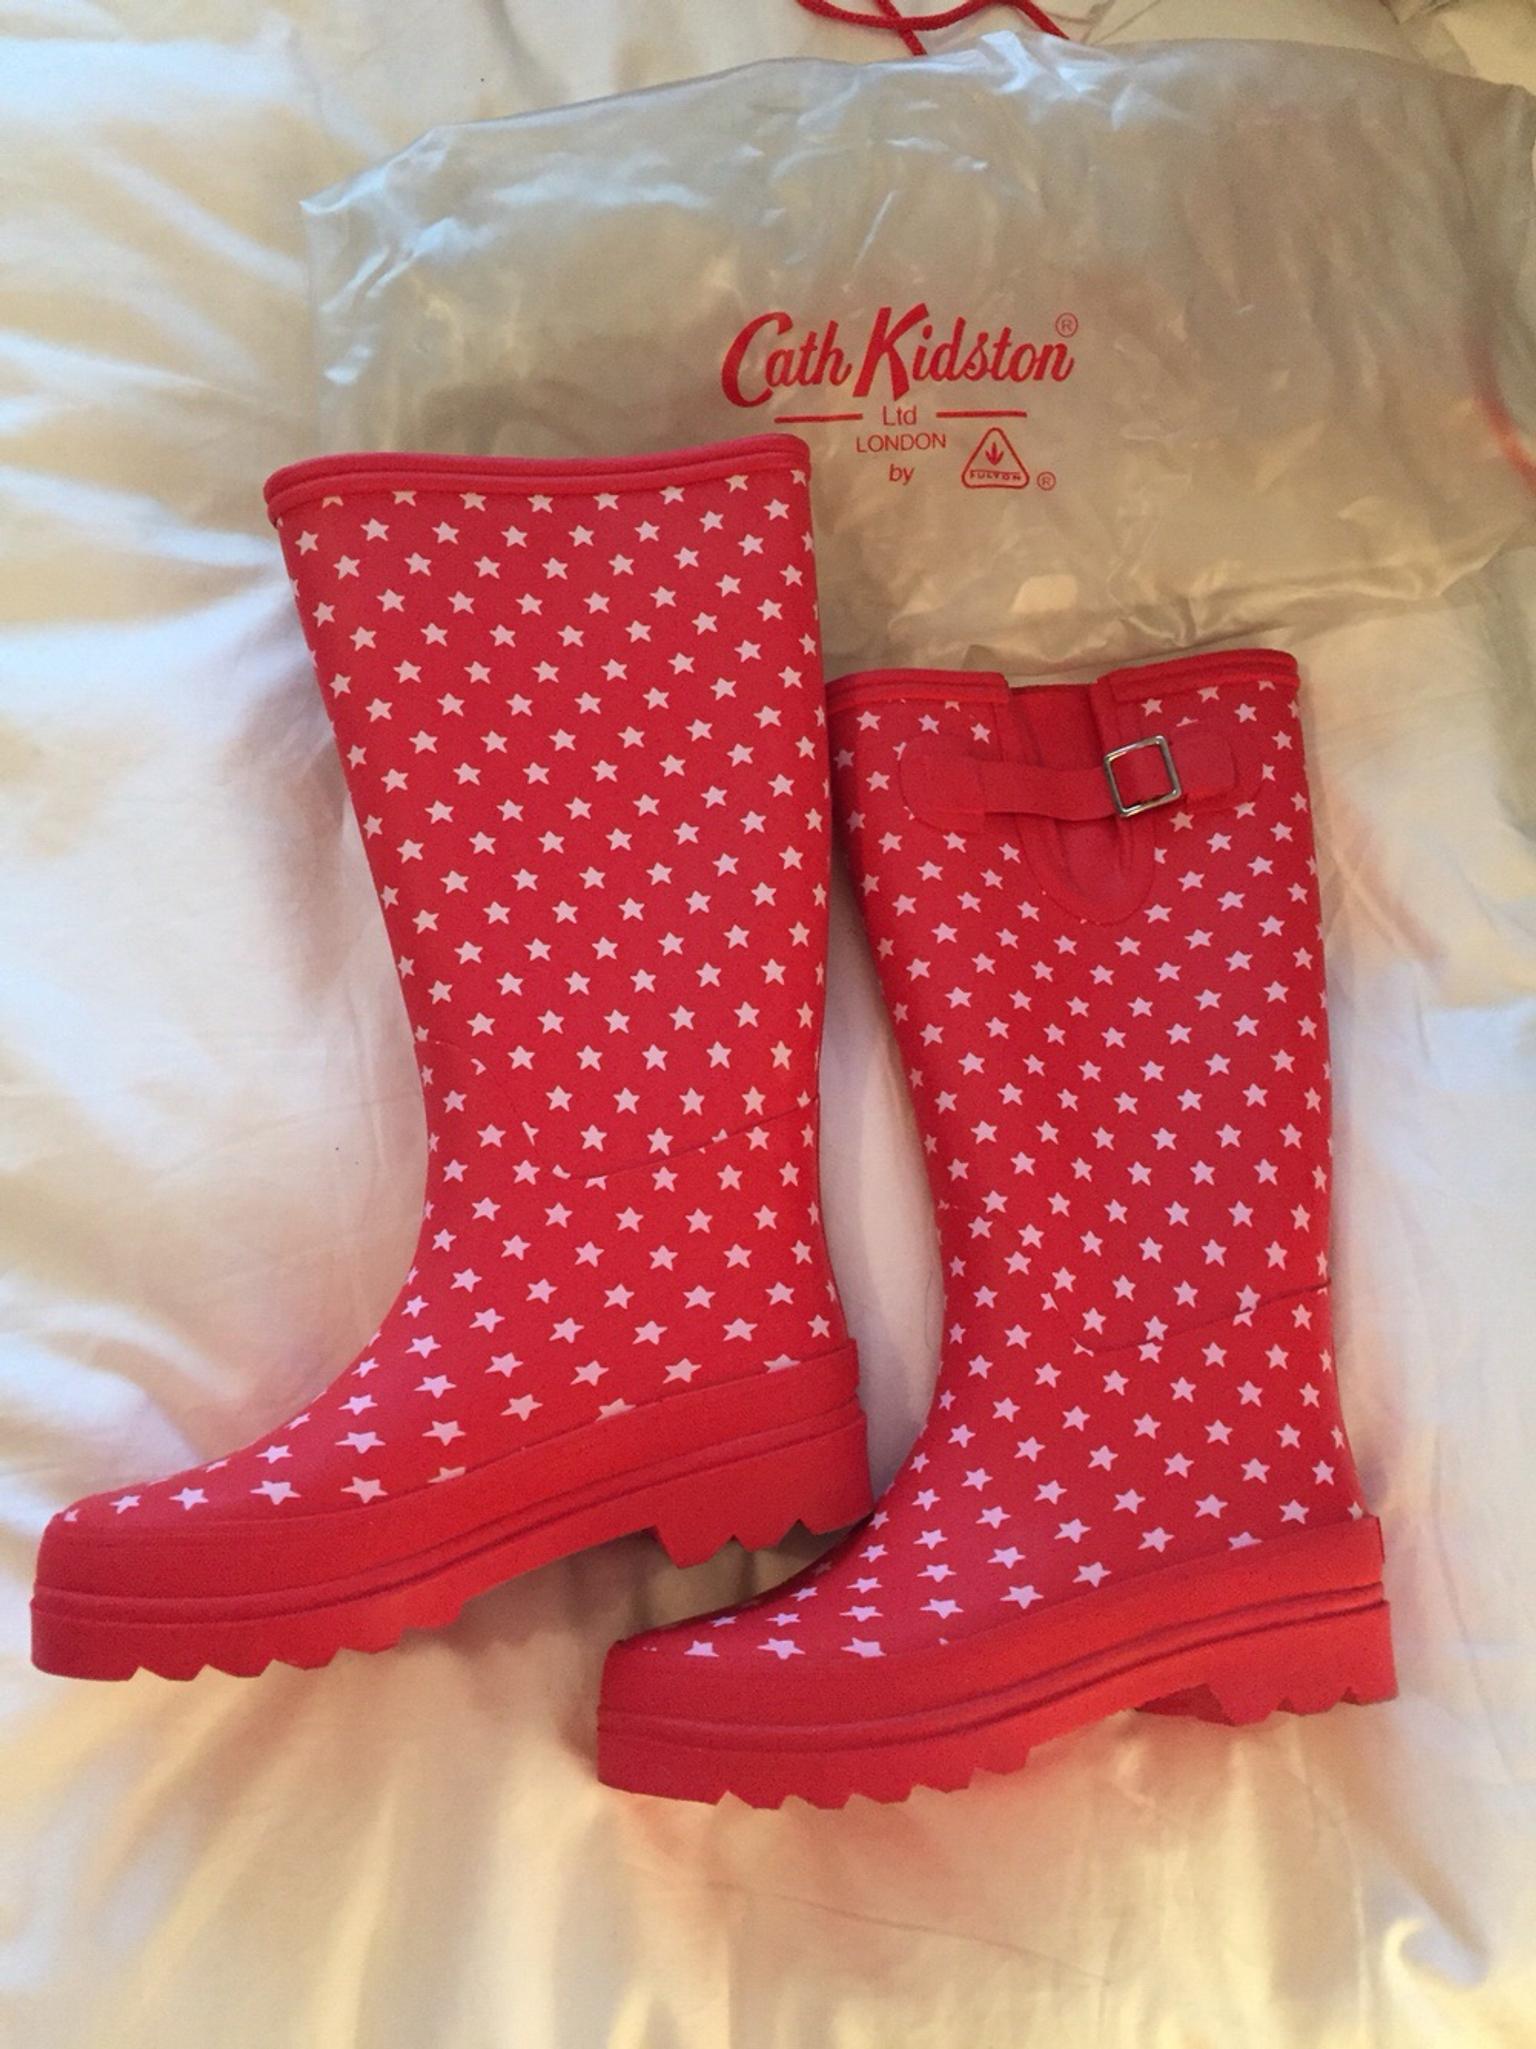 cath kidston boots